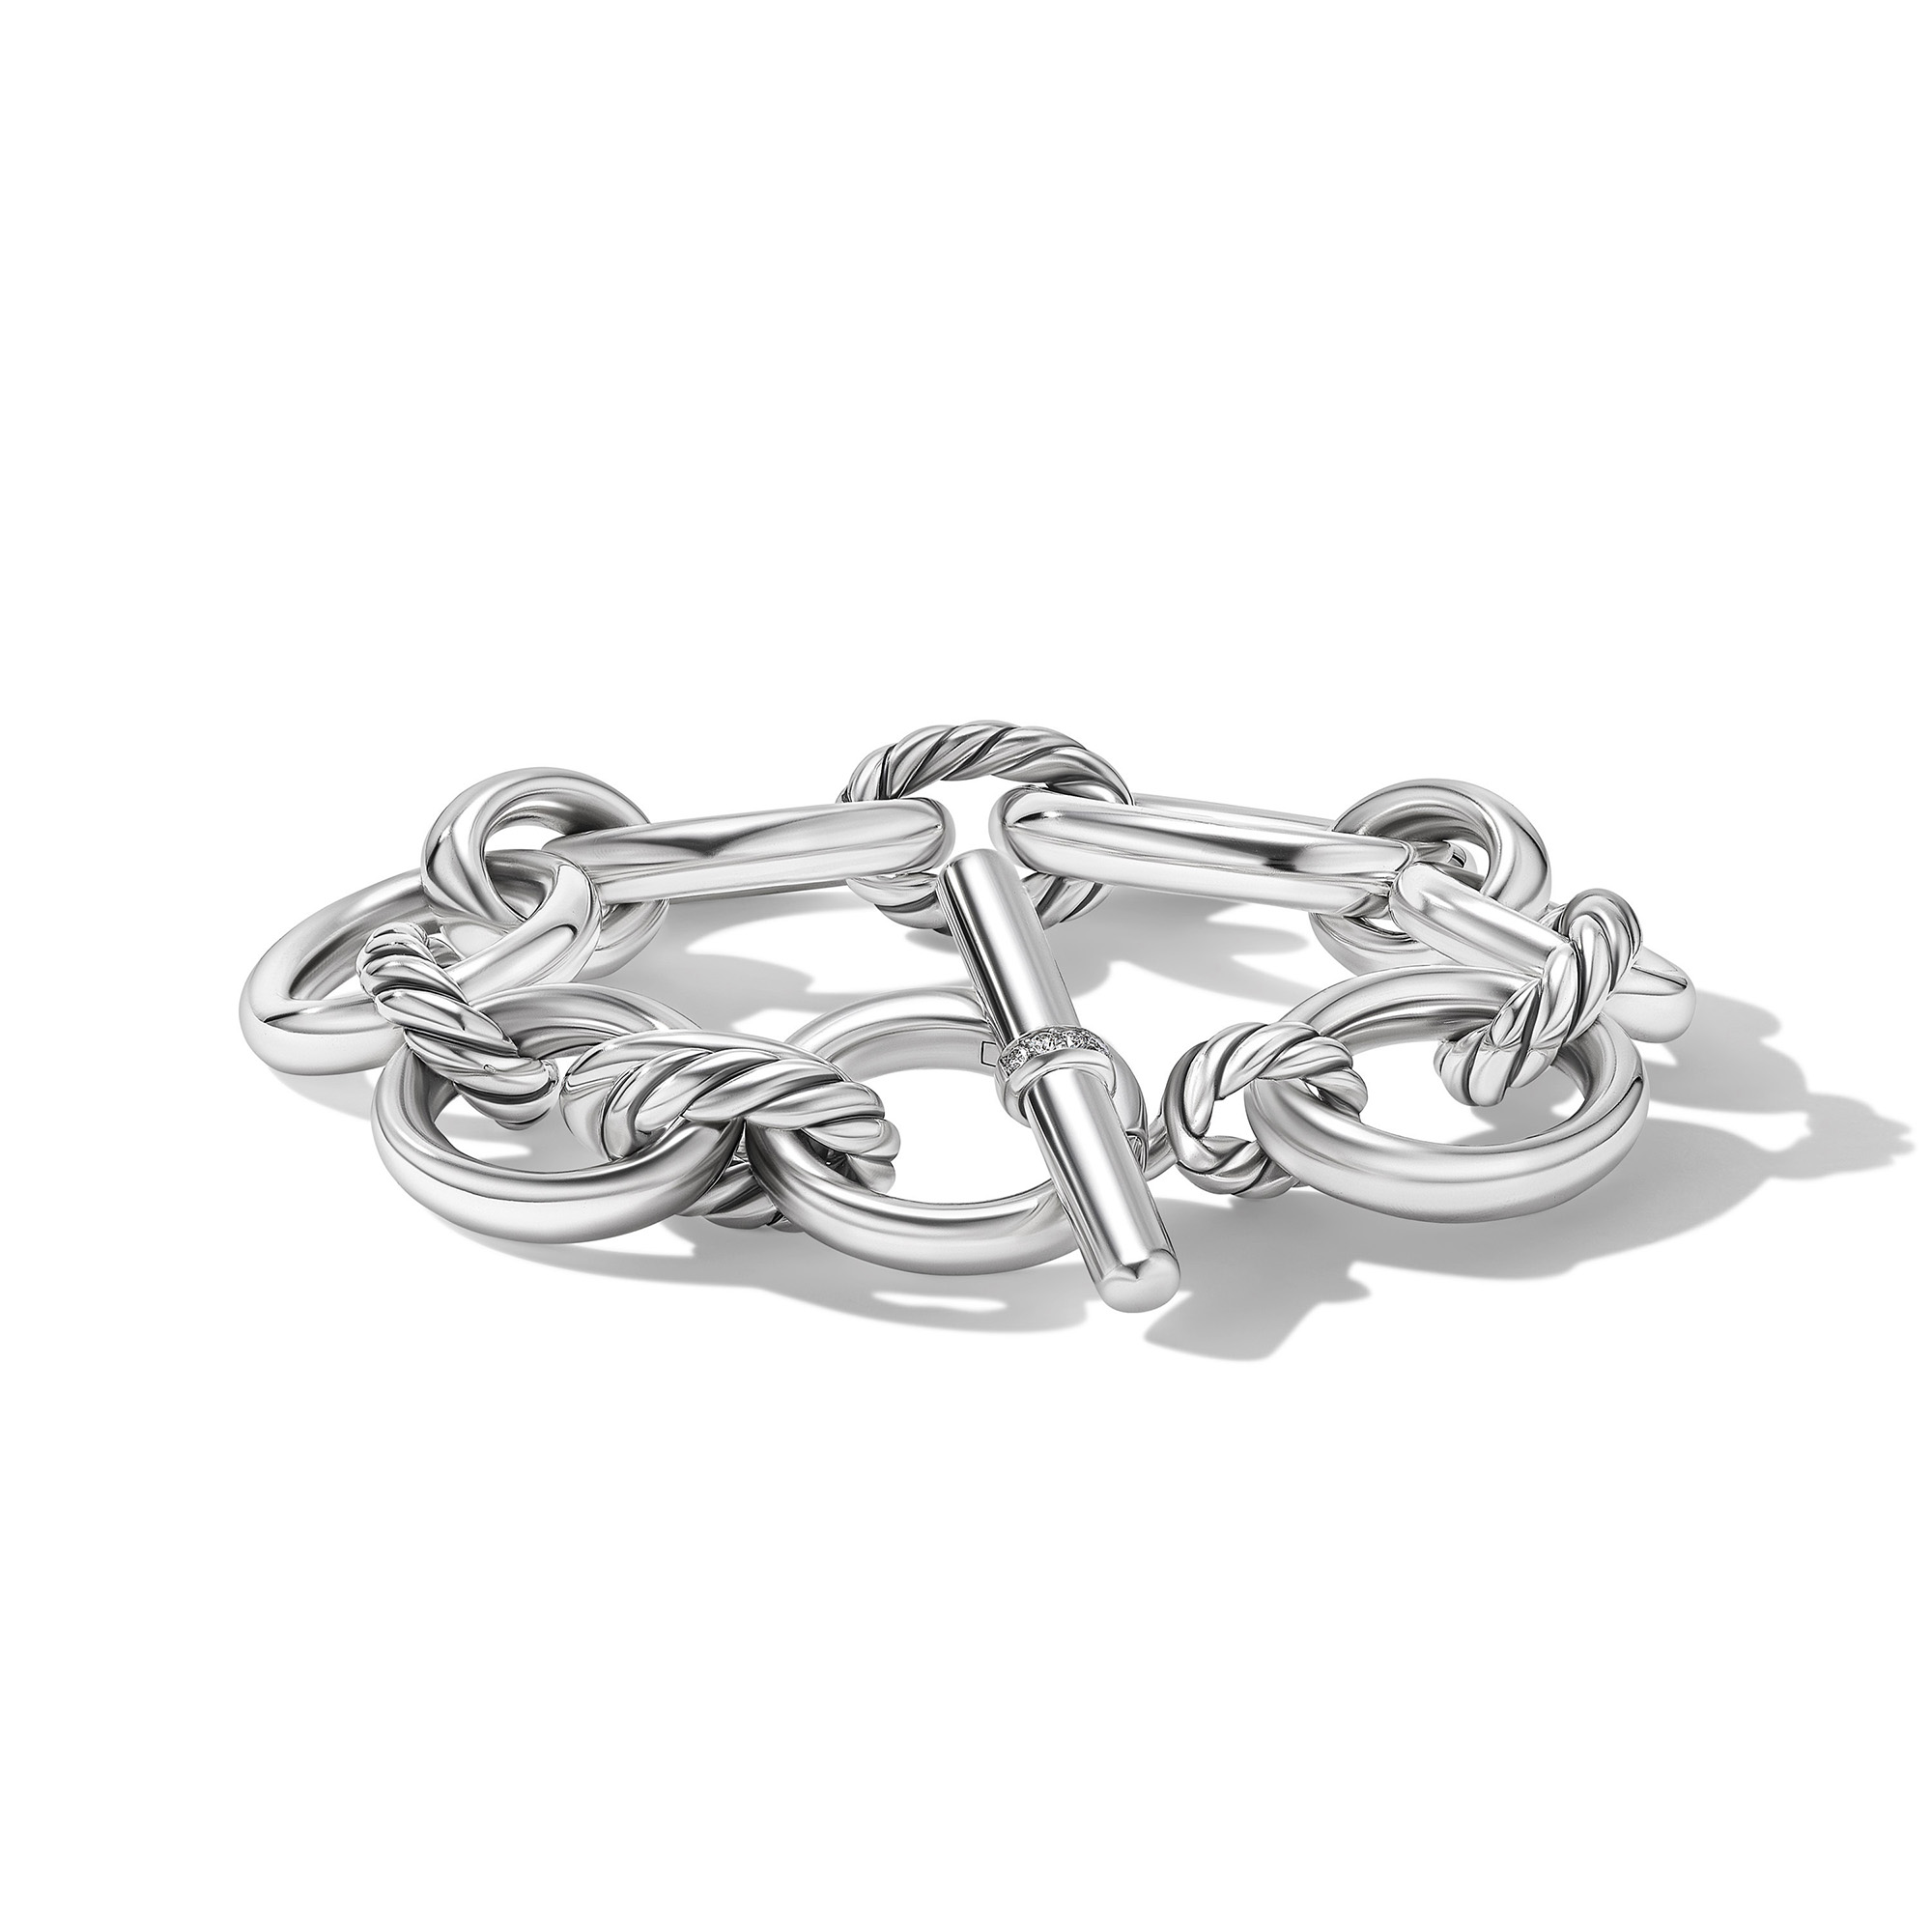 David Yurman Men's Faceted Link Bracelet in Sterling Silver - Black Diamond - Size Medium